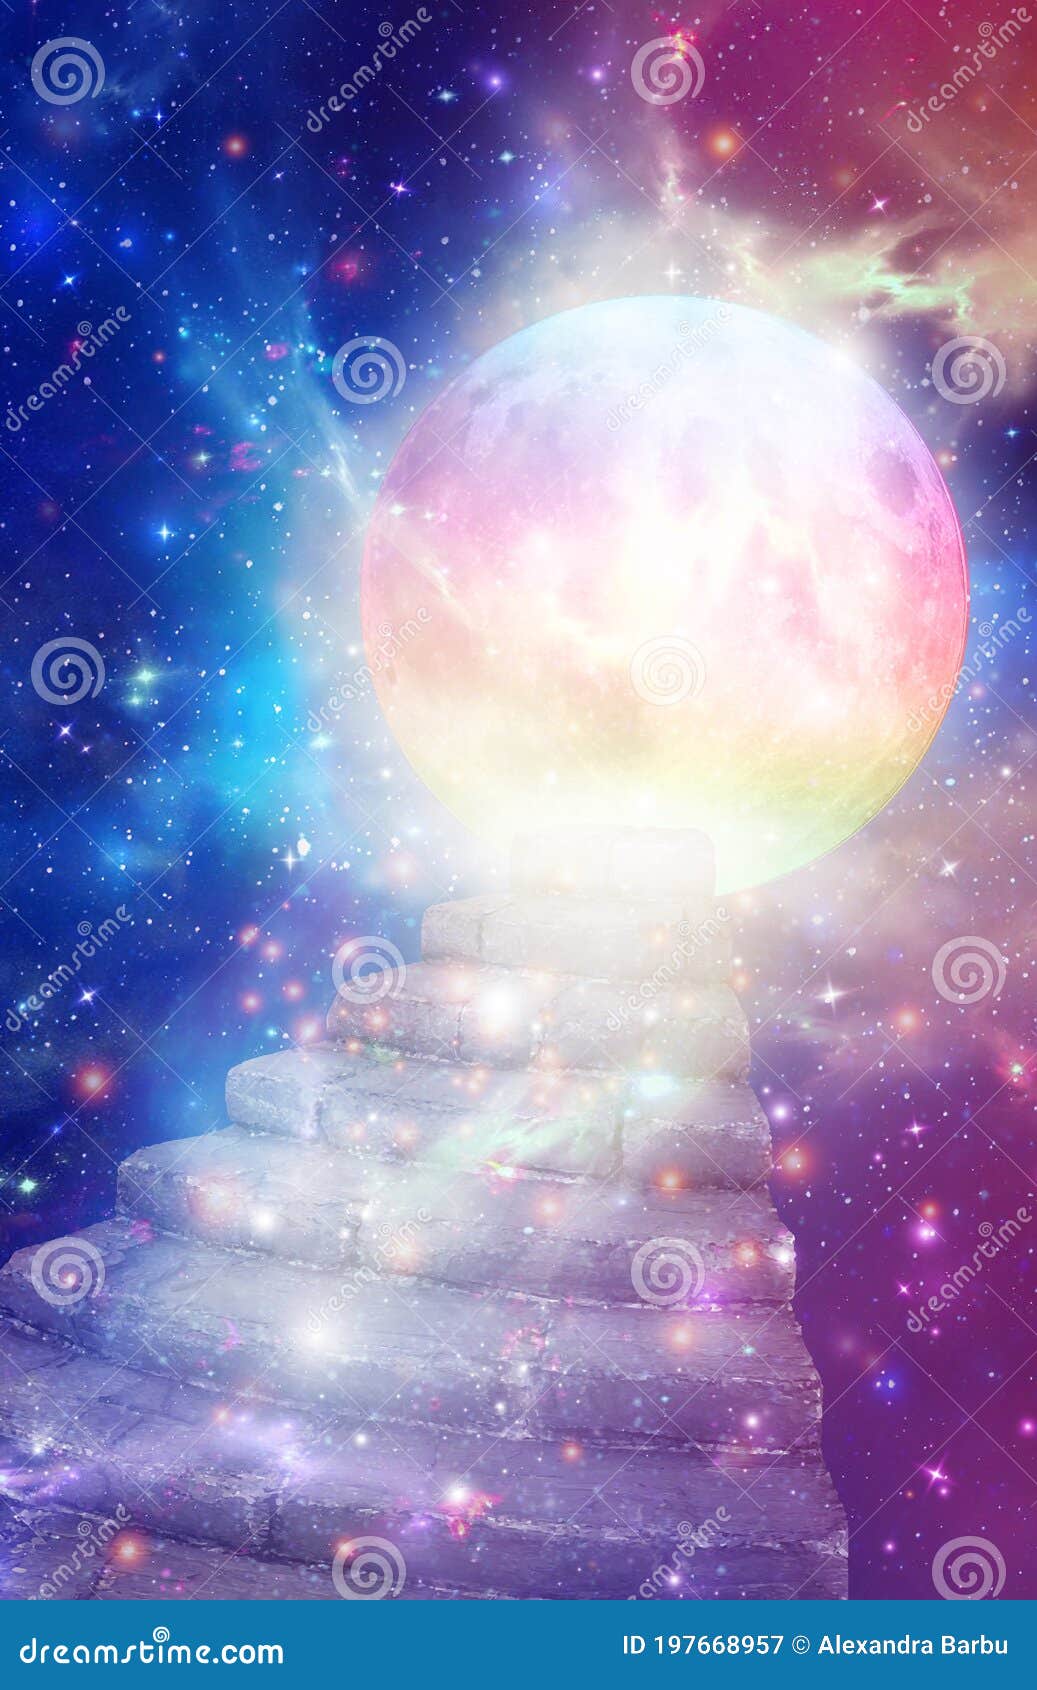 magical moon energy healing universal energy, meditation